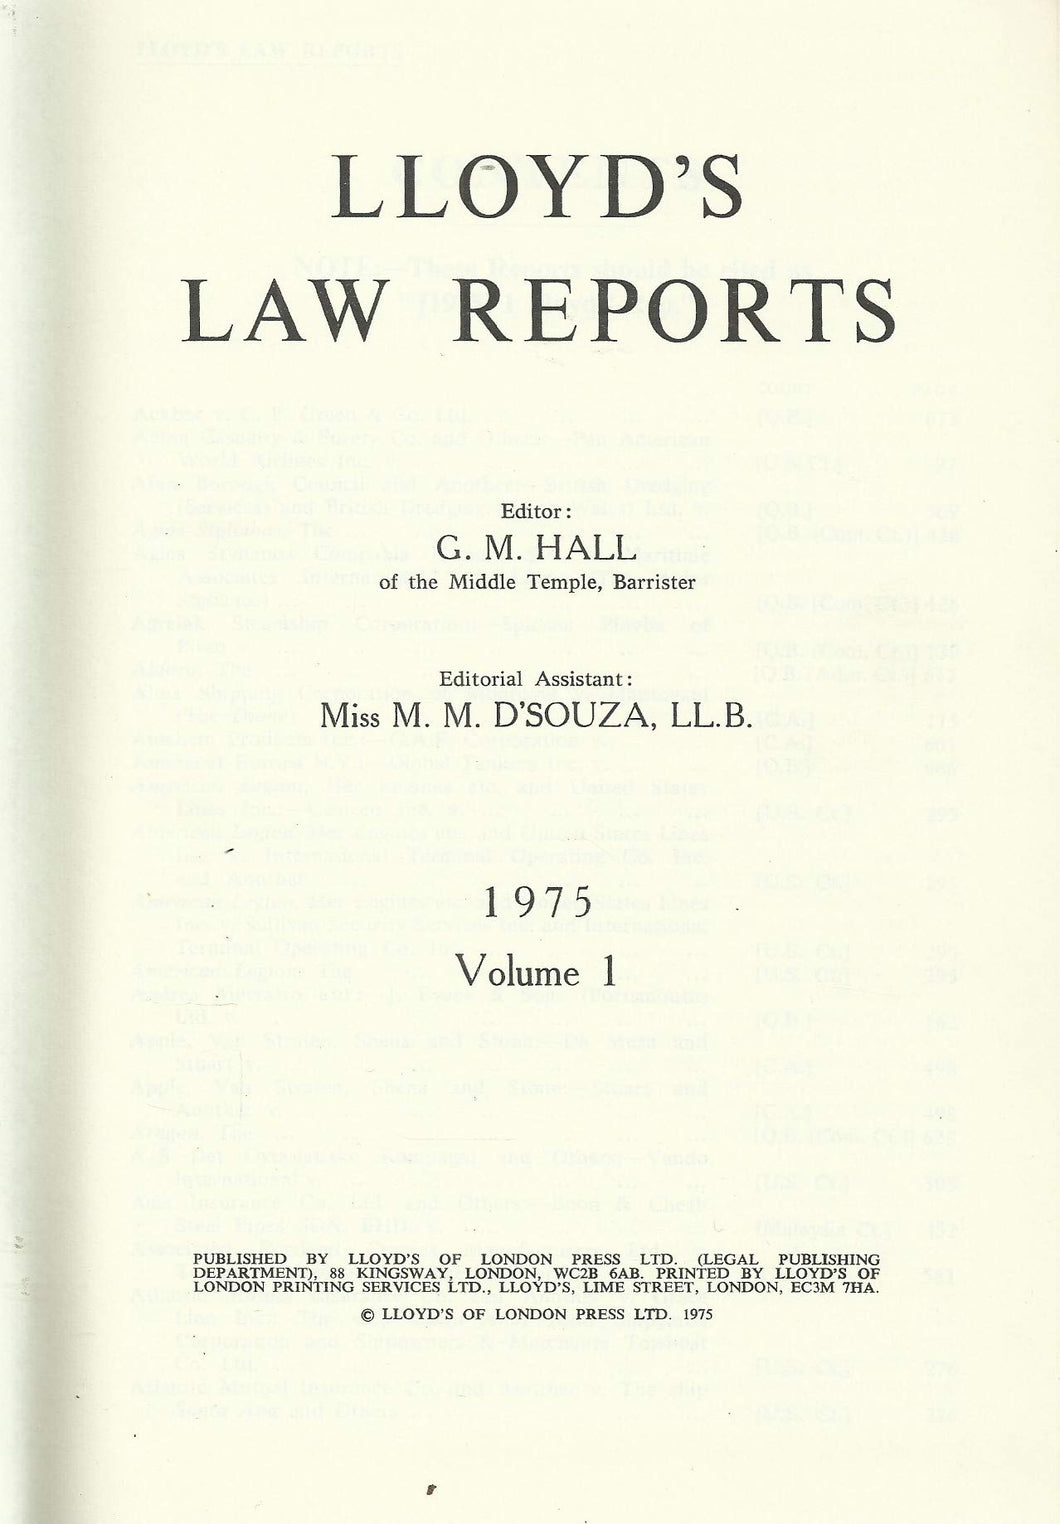 Lloyd's Law Reports - 1975, Volume 1